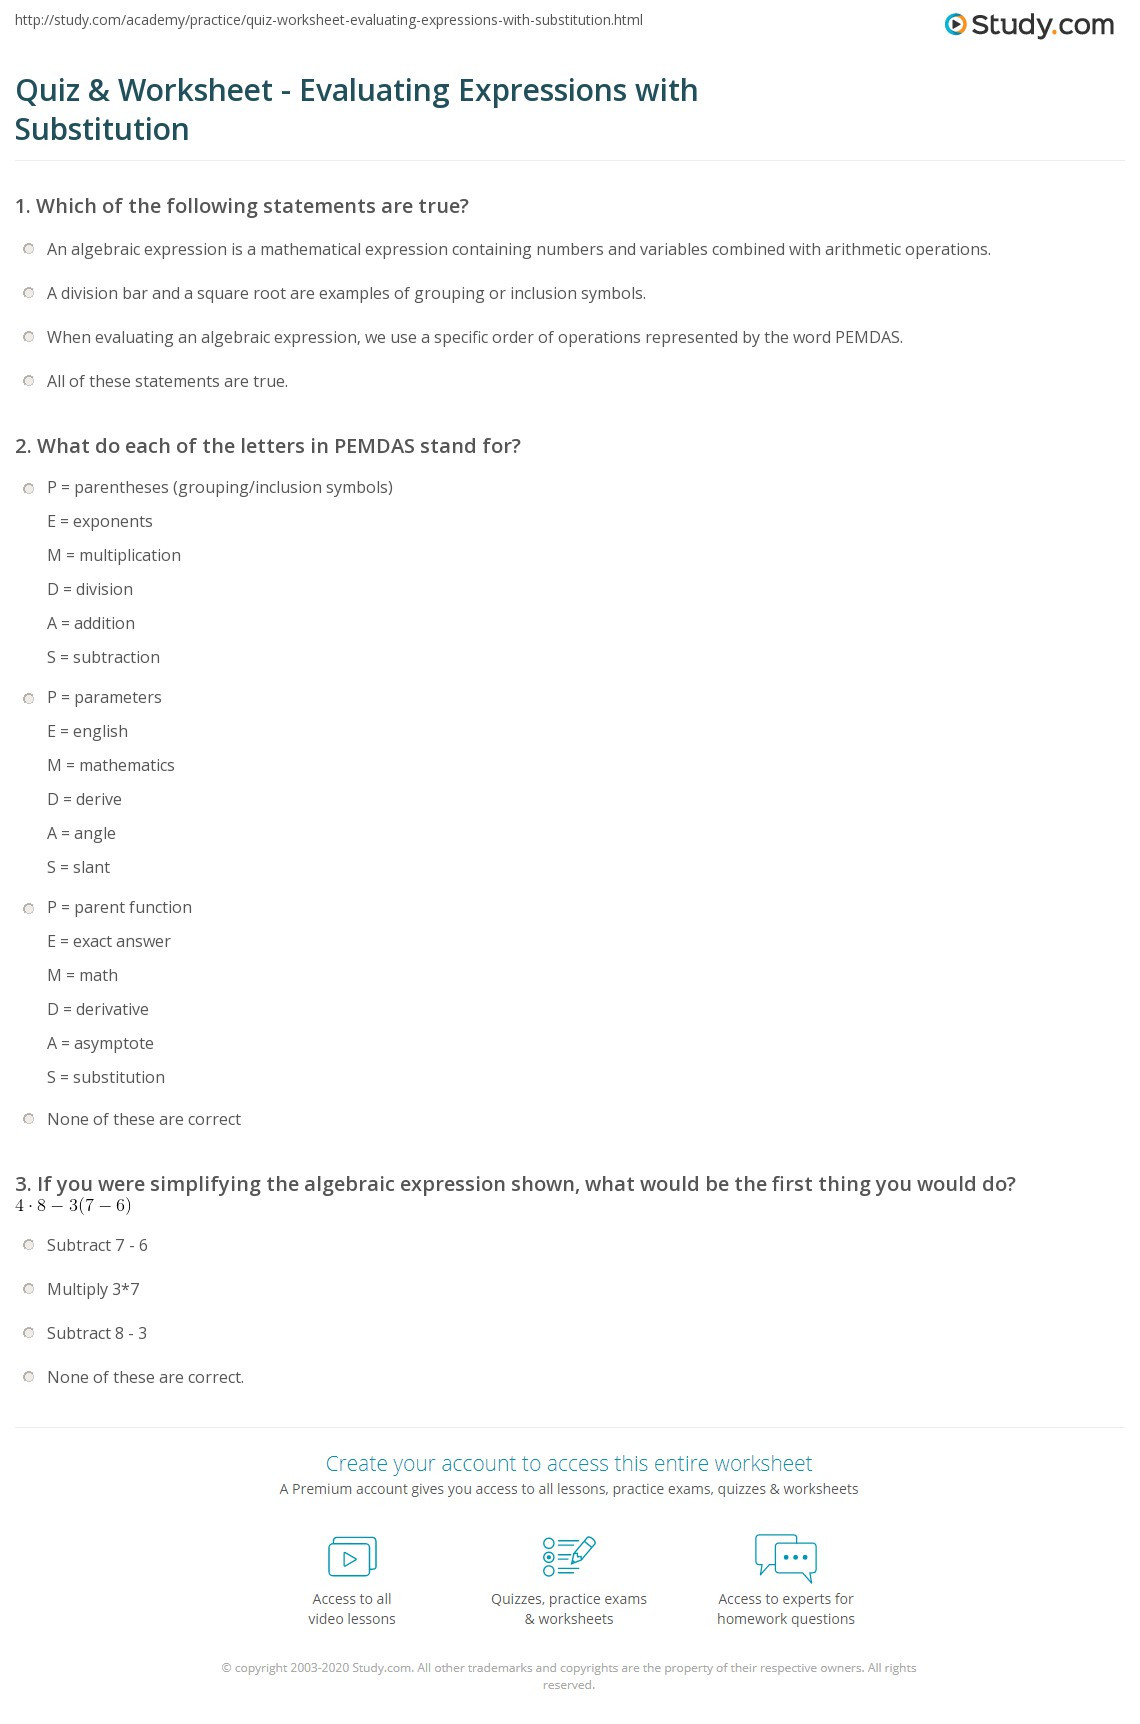 Evaluate the Expression Worksheet Quiz &amp; Worksheet Evaluating Expressions with Substitution